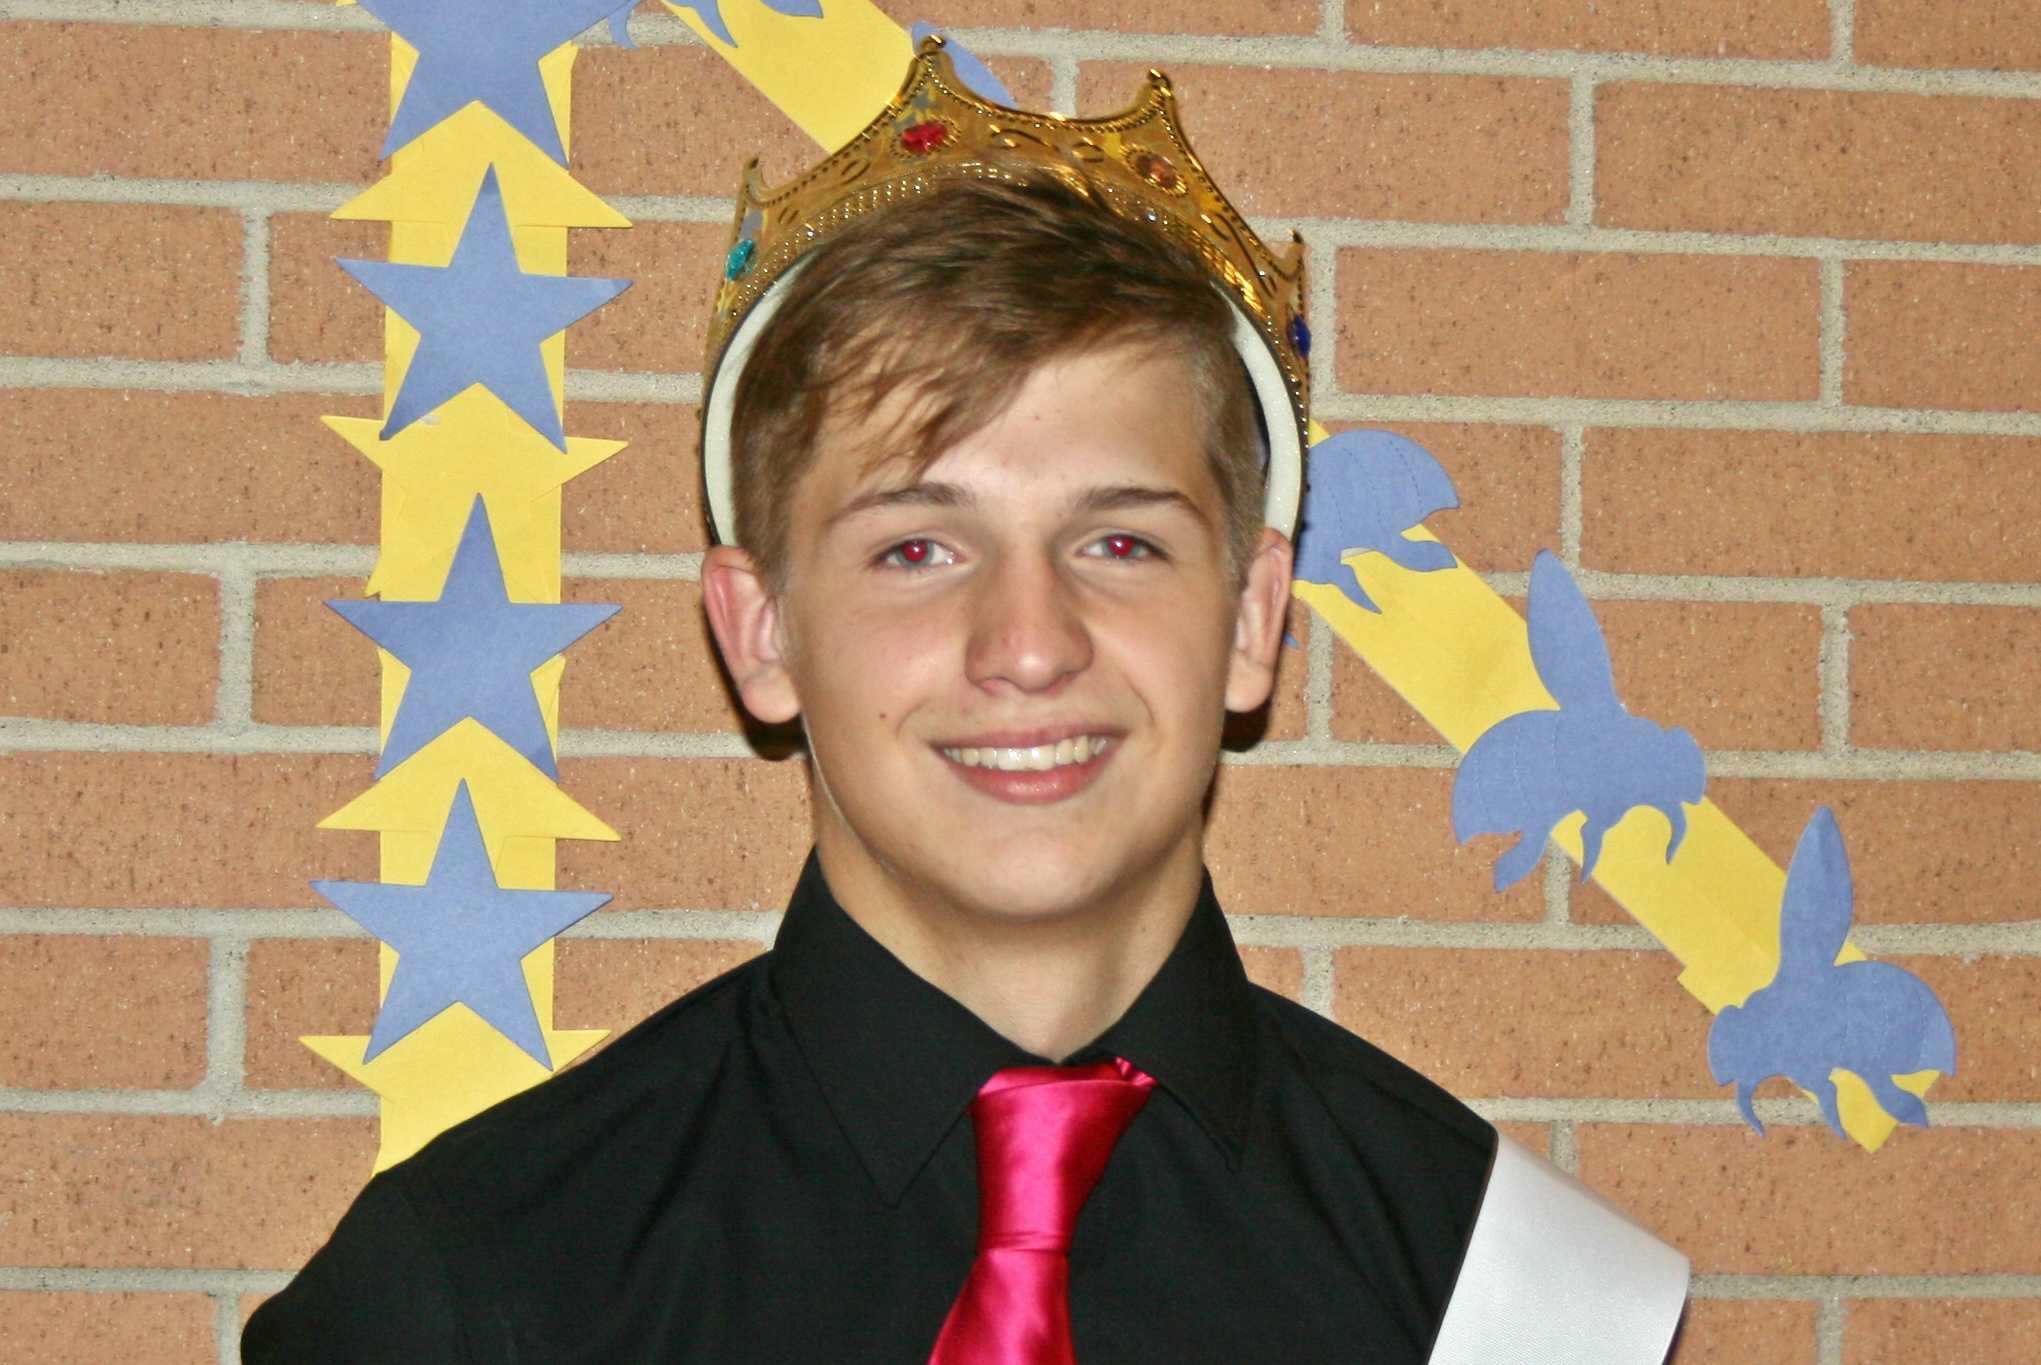 Junior Sebastian Young won the 2016 Mr. Kearsley talent show.